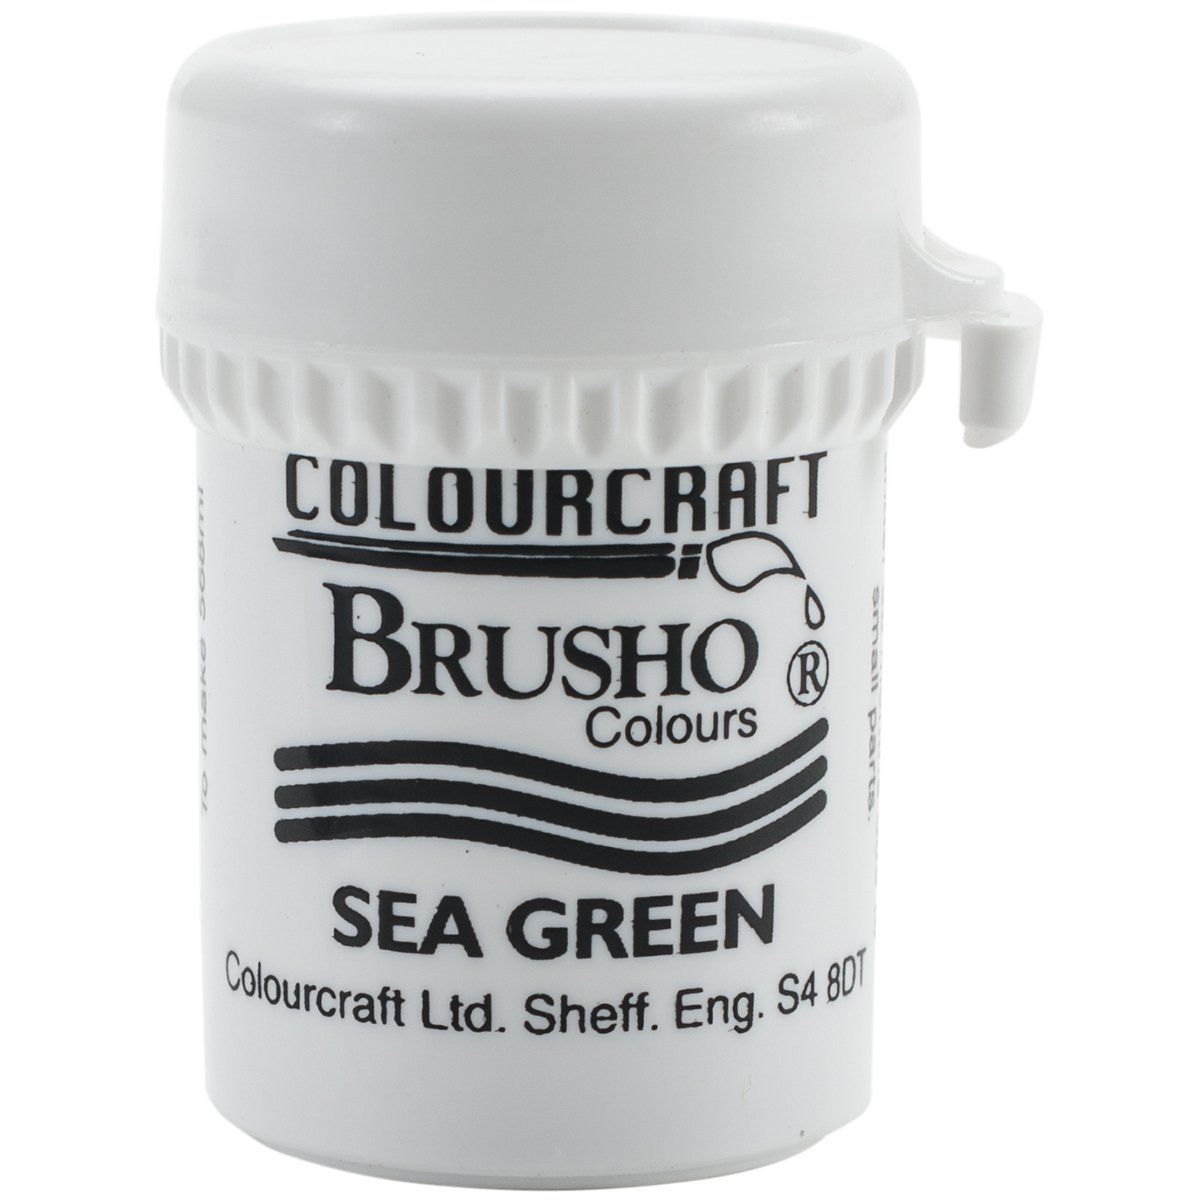 Brusho Crystal Colour - Sea Green 15 gm